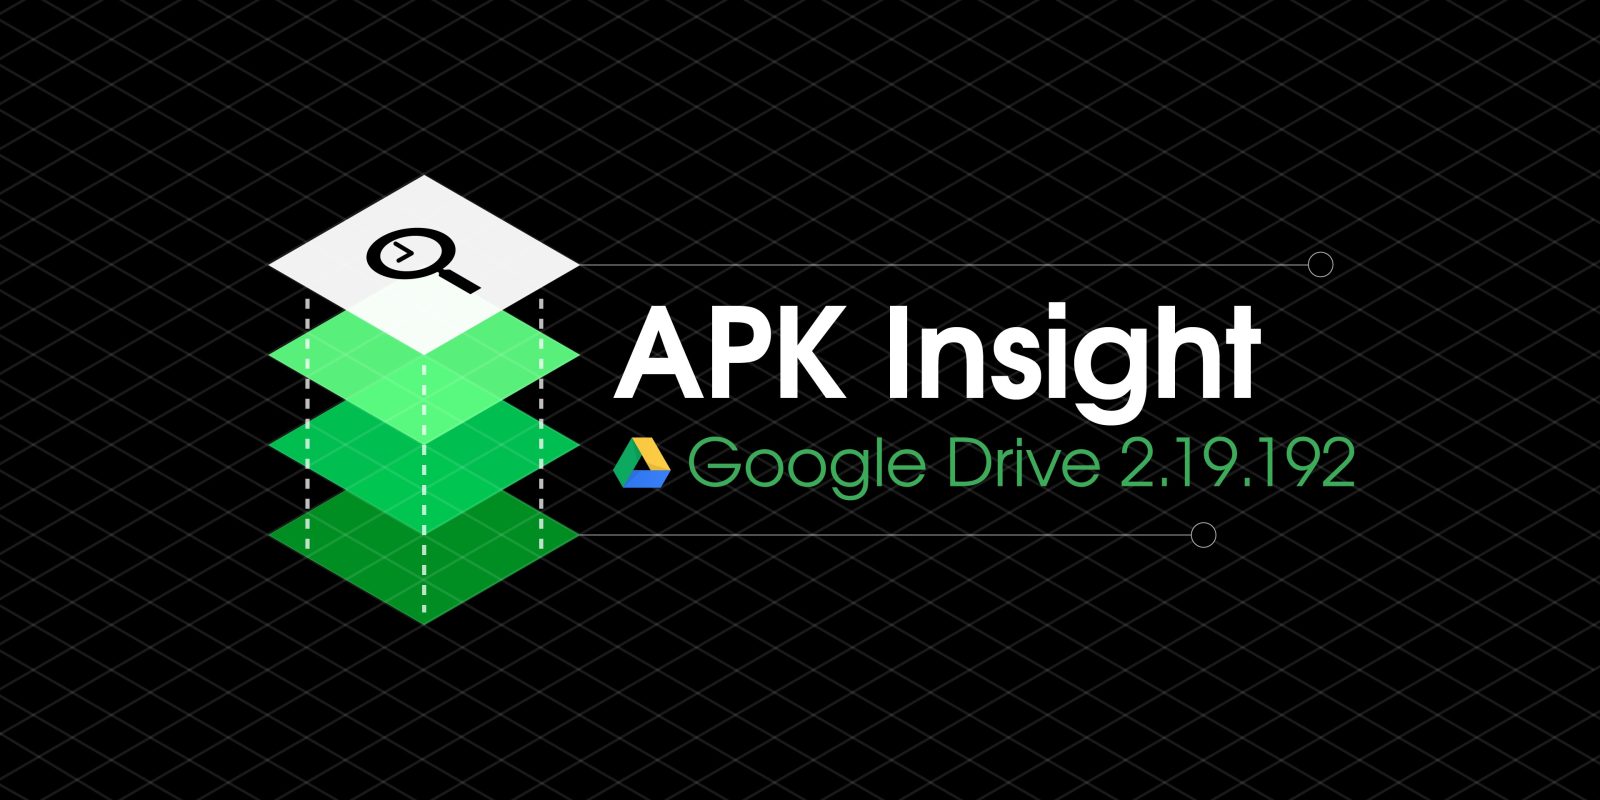 Google Drive APK Insight